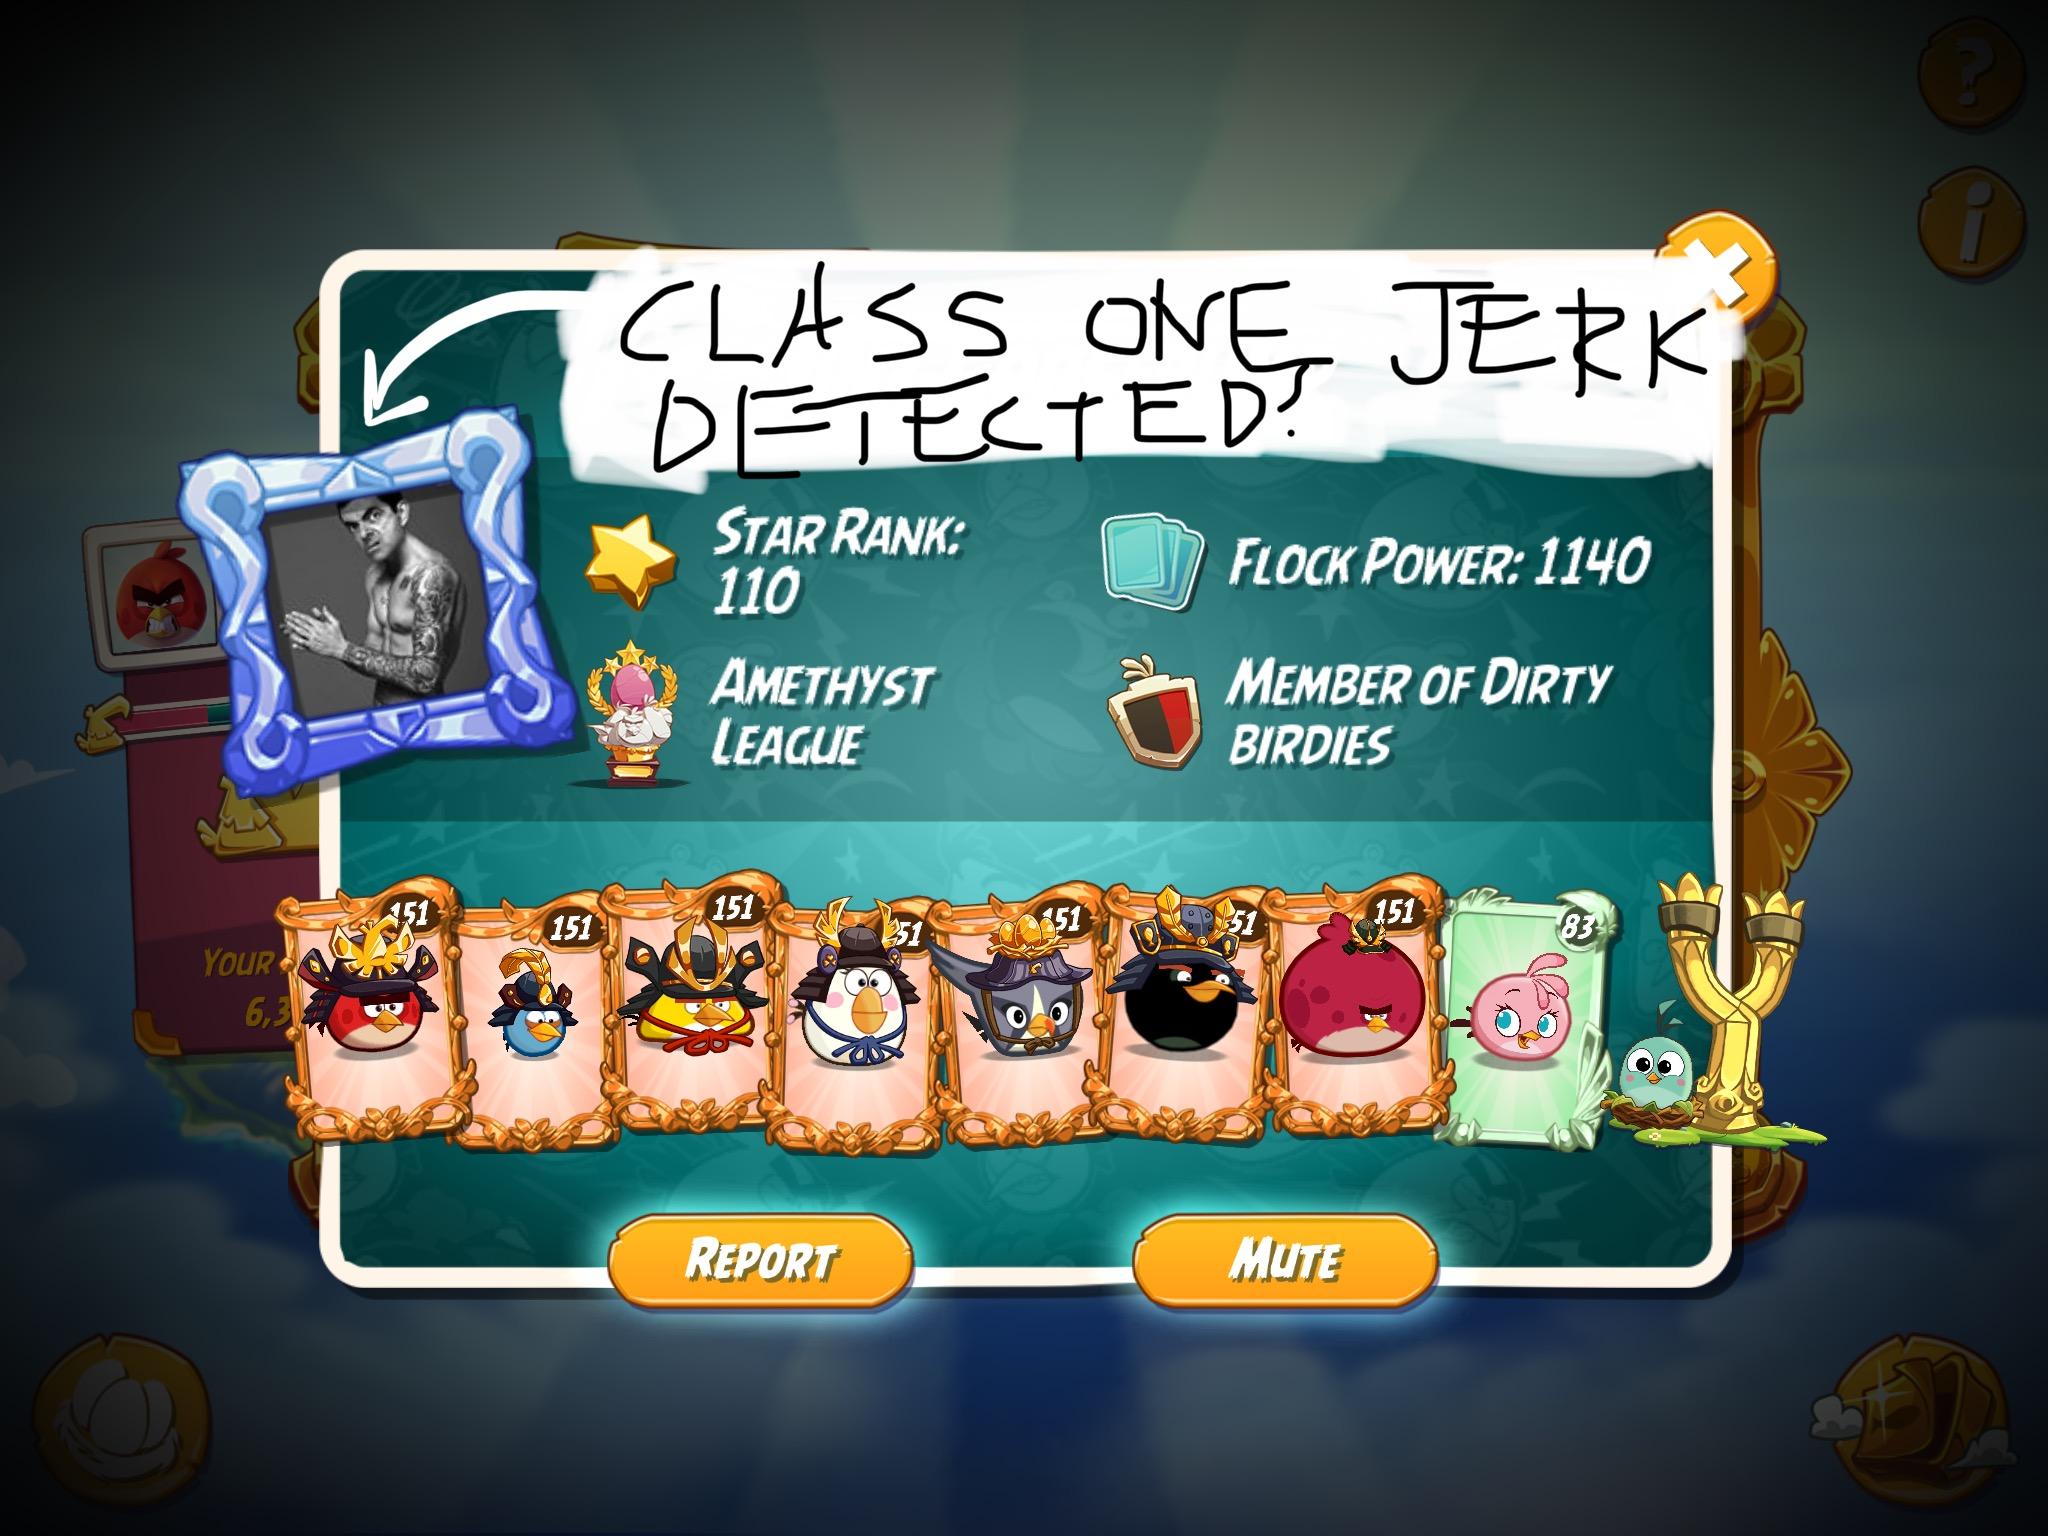 CLASS ONE JERK DETECTED